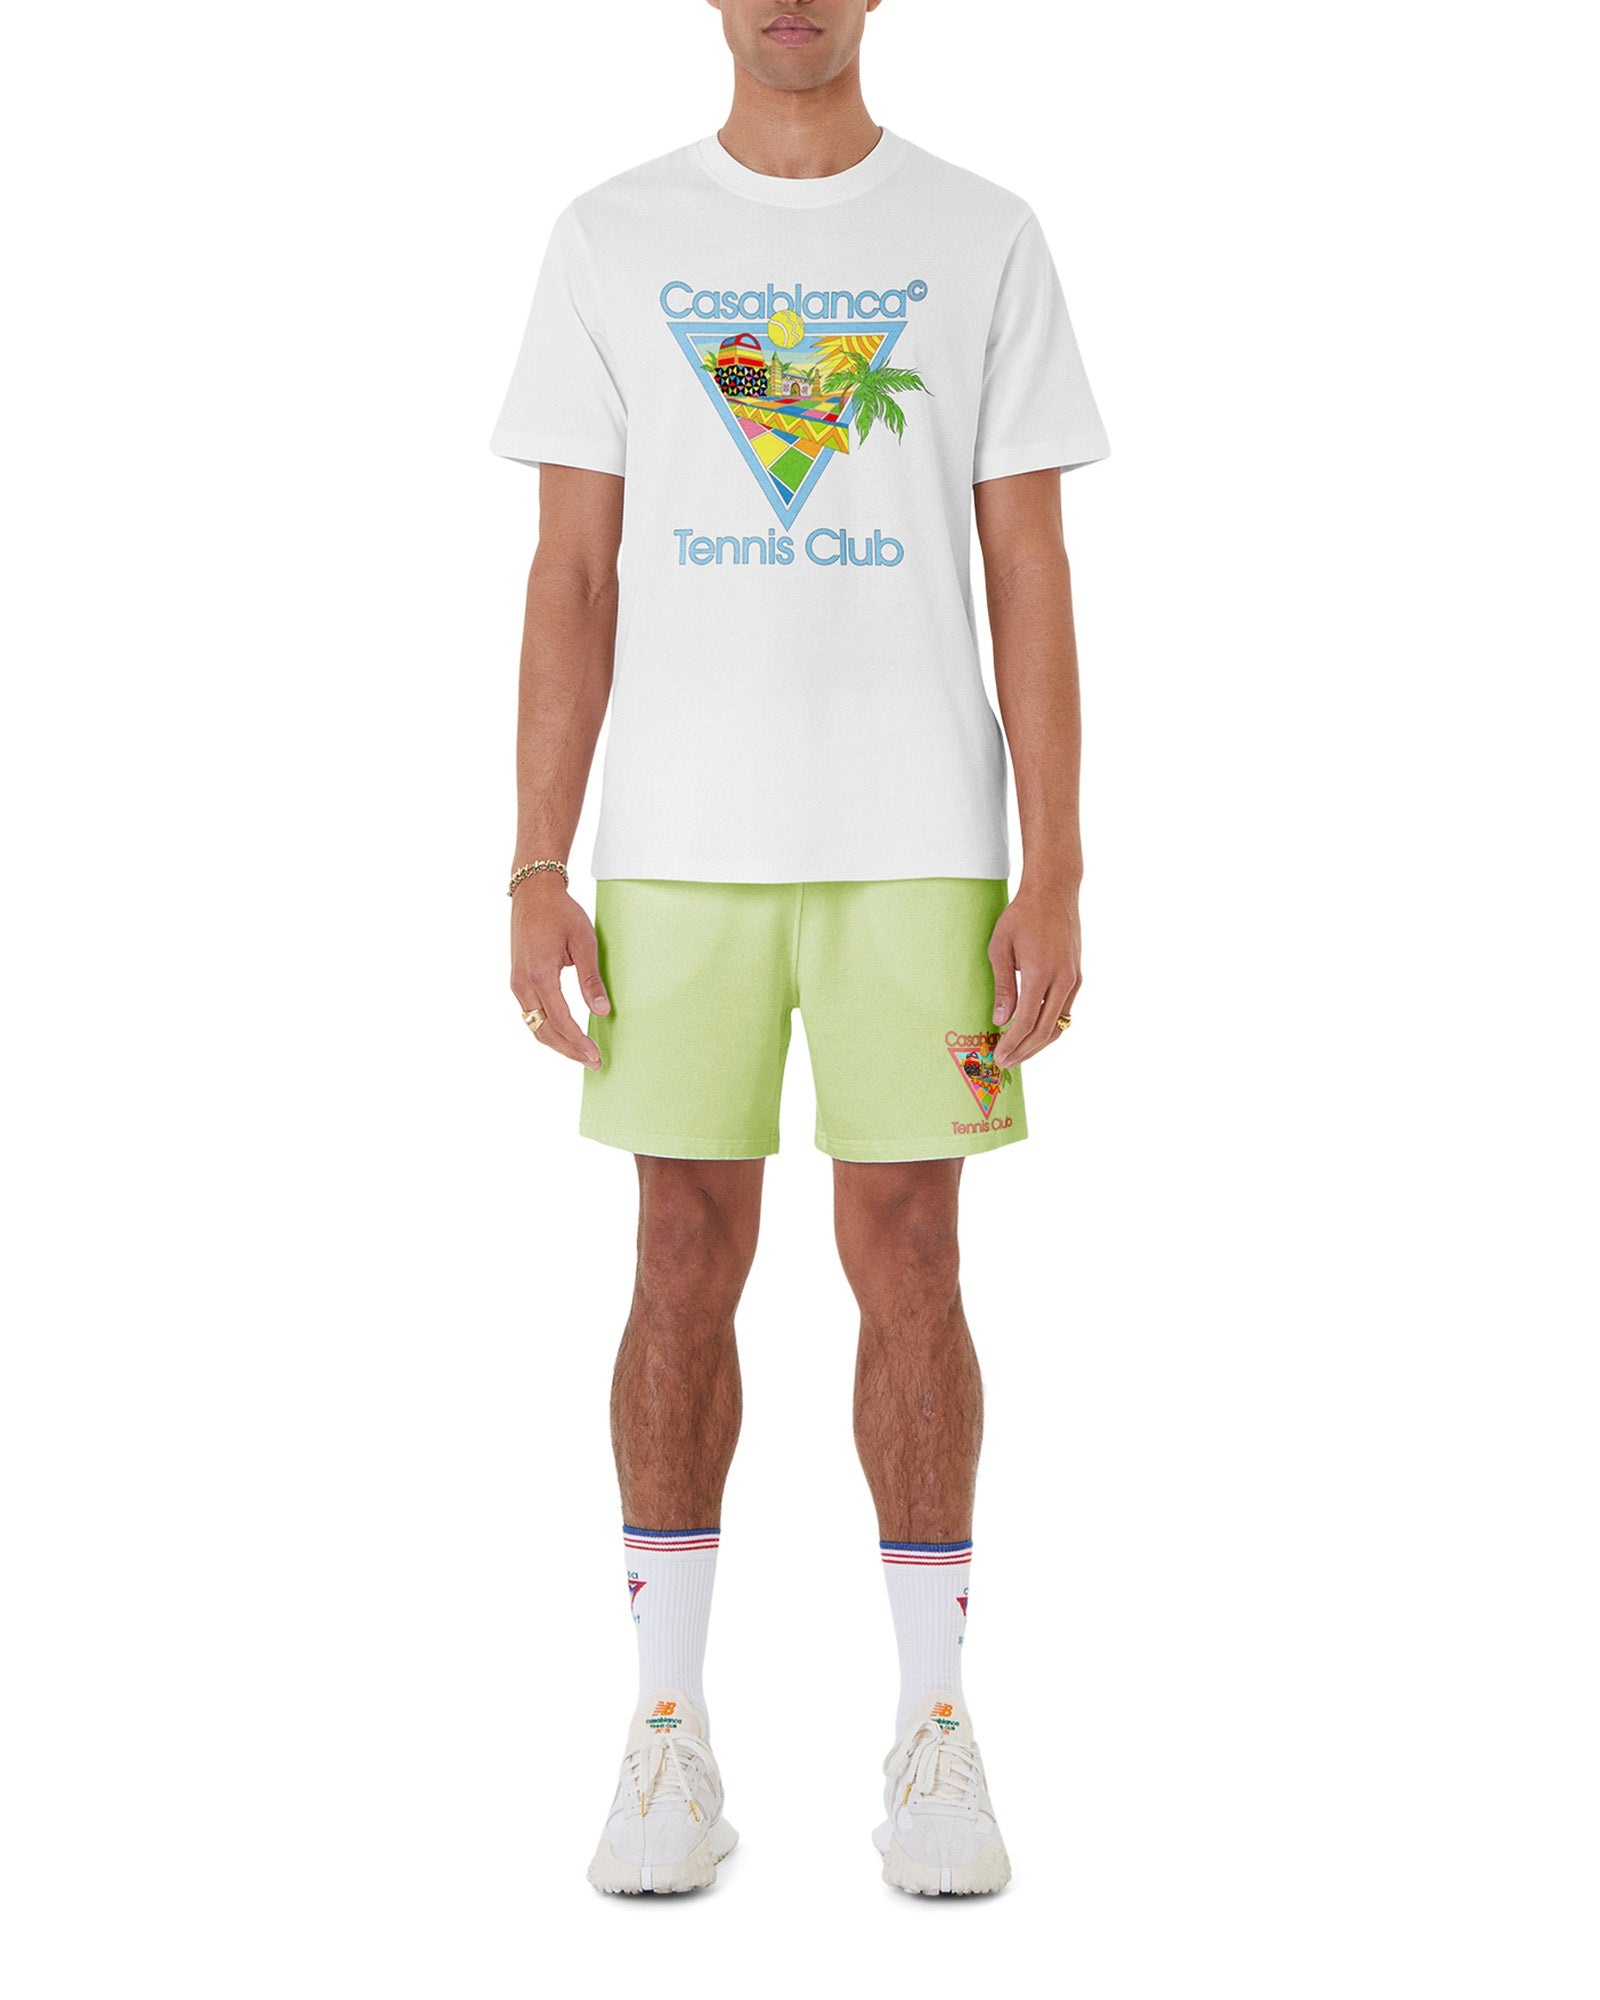 Afro Cubism Tennis Club T-Shirt - 2